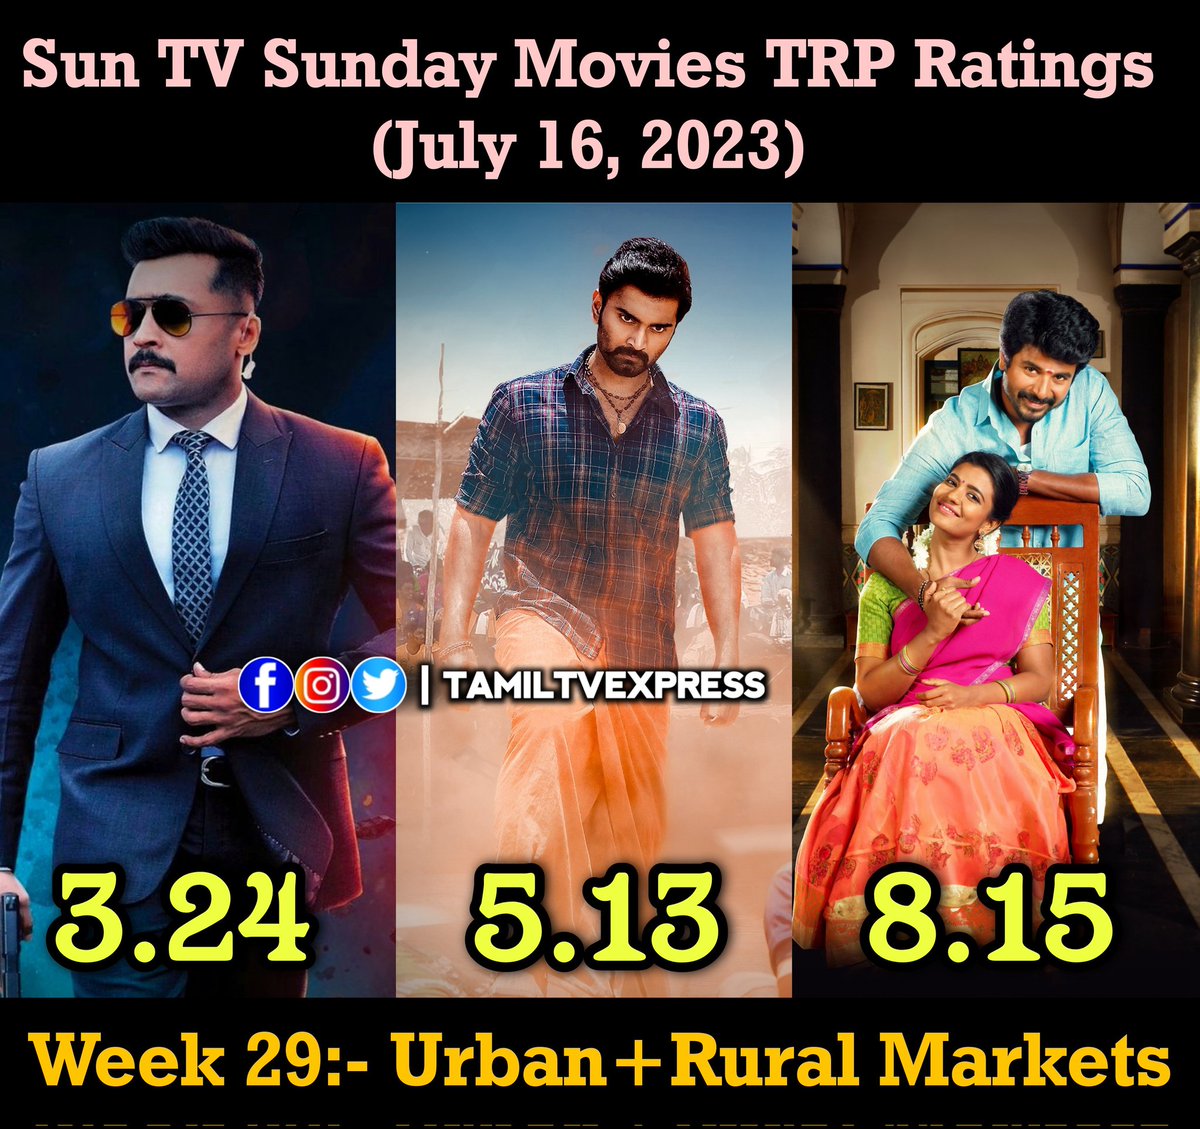 Week 29:- #SunTV  Sunday Movies TRP Ratings In U+R Markets 

#Kaappaan -- 3.24
#PattathuArasan -- 5.13
#NammaVeettuPillai -- 8.15

#Suriya #Mohanlal #arya  #Sayyeshaa #Atharva #AshikaRangnath #Sivakarthikeyan  #AishwaryaRajesh #AnuEmmanuel